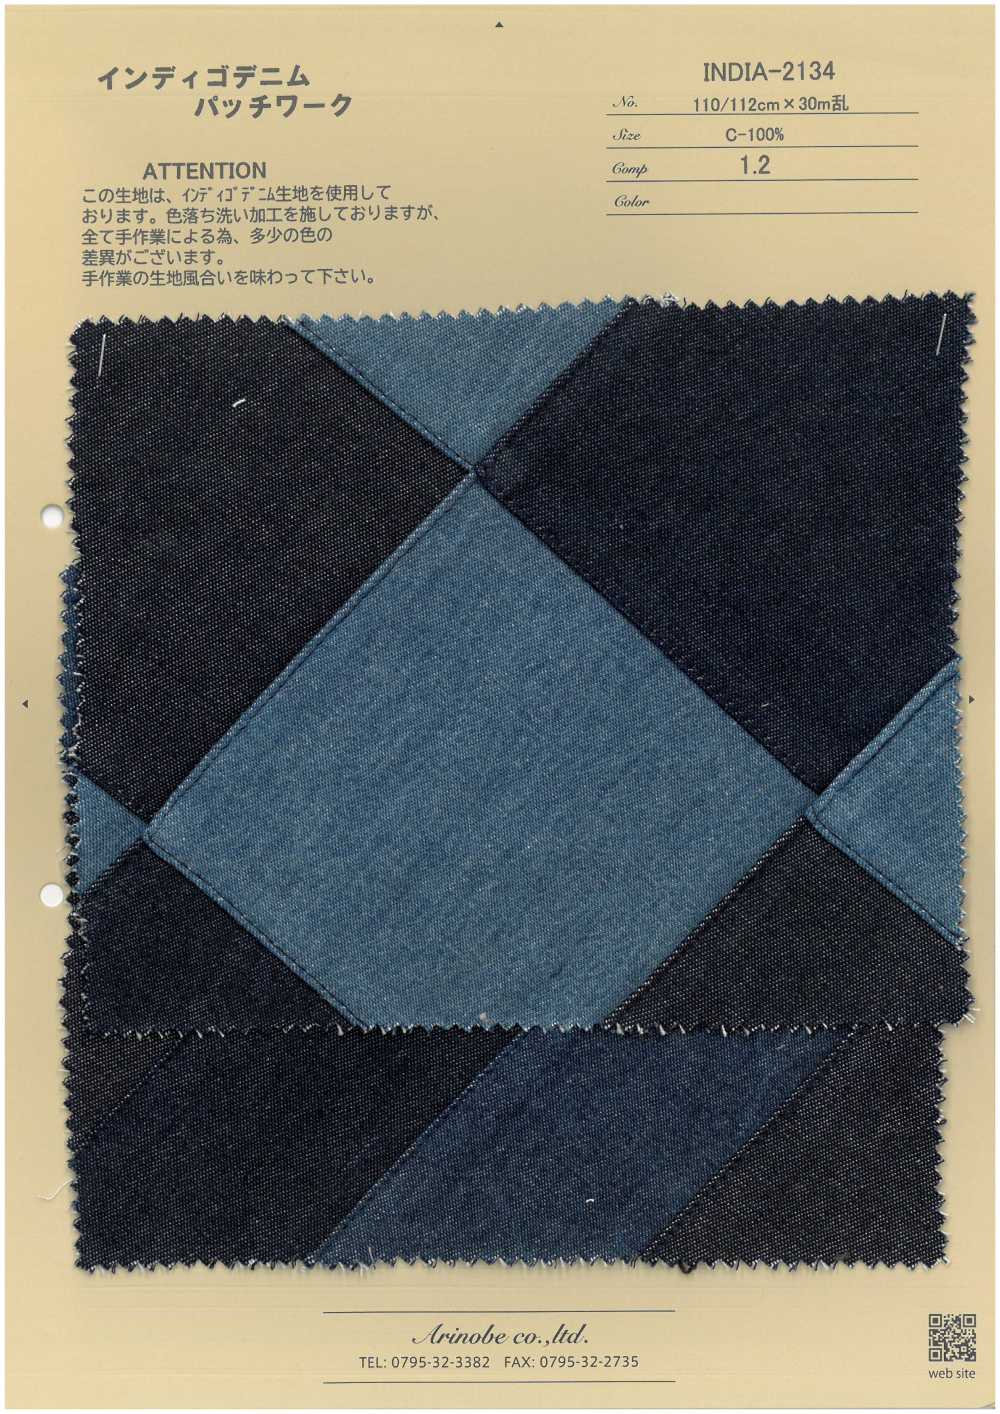 INDIA-2134 Patchwork De Denim Indigo[Fabrication De Textile] ARINOBE CO., LTD.